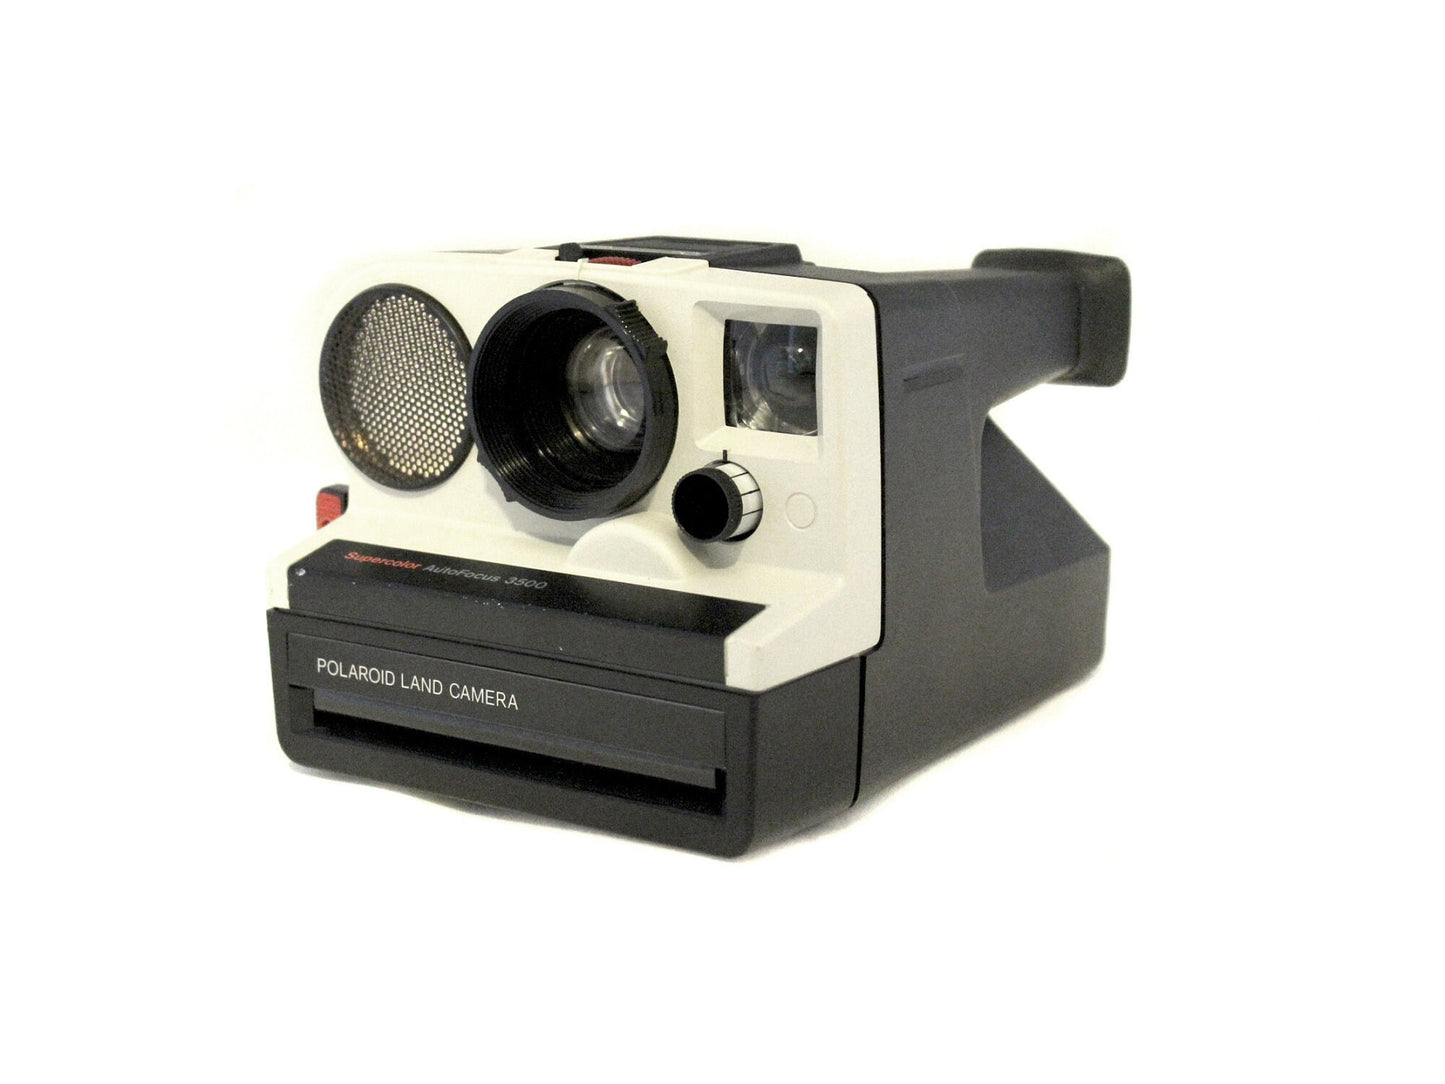 Polaroid Supercolor Sonar Autofocus 3500